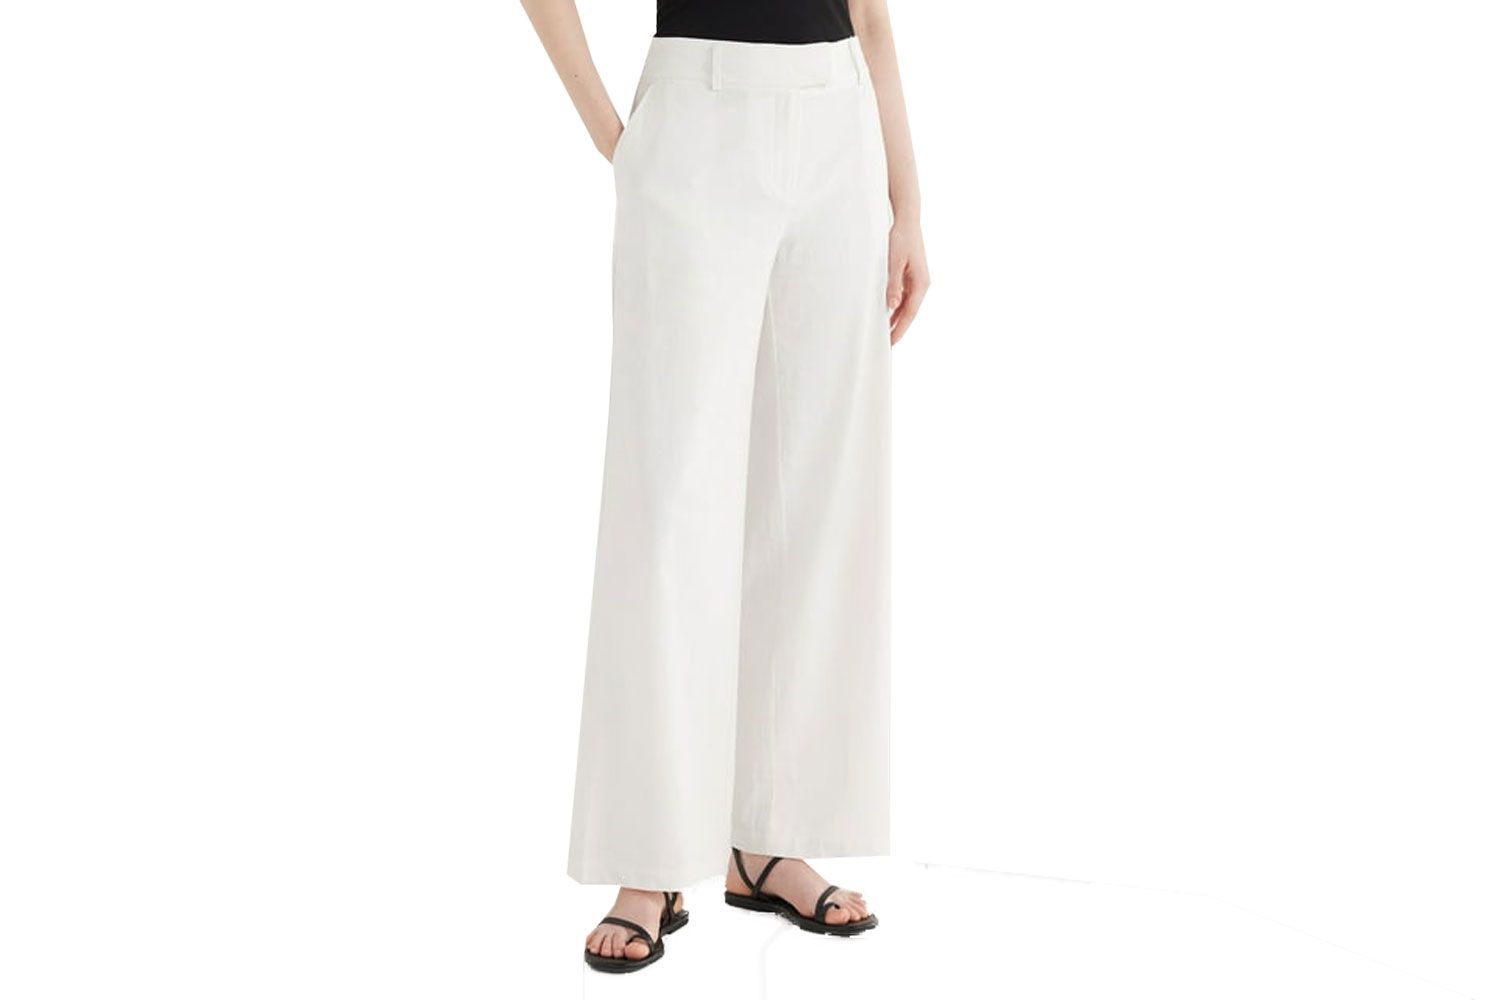 Walmart Scoop Women's Tailored Linen Blend Pants with Wide Leg, Sizes 0-18, 31.5ââ Inseam